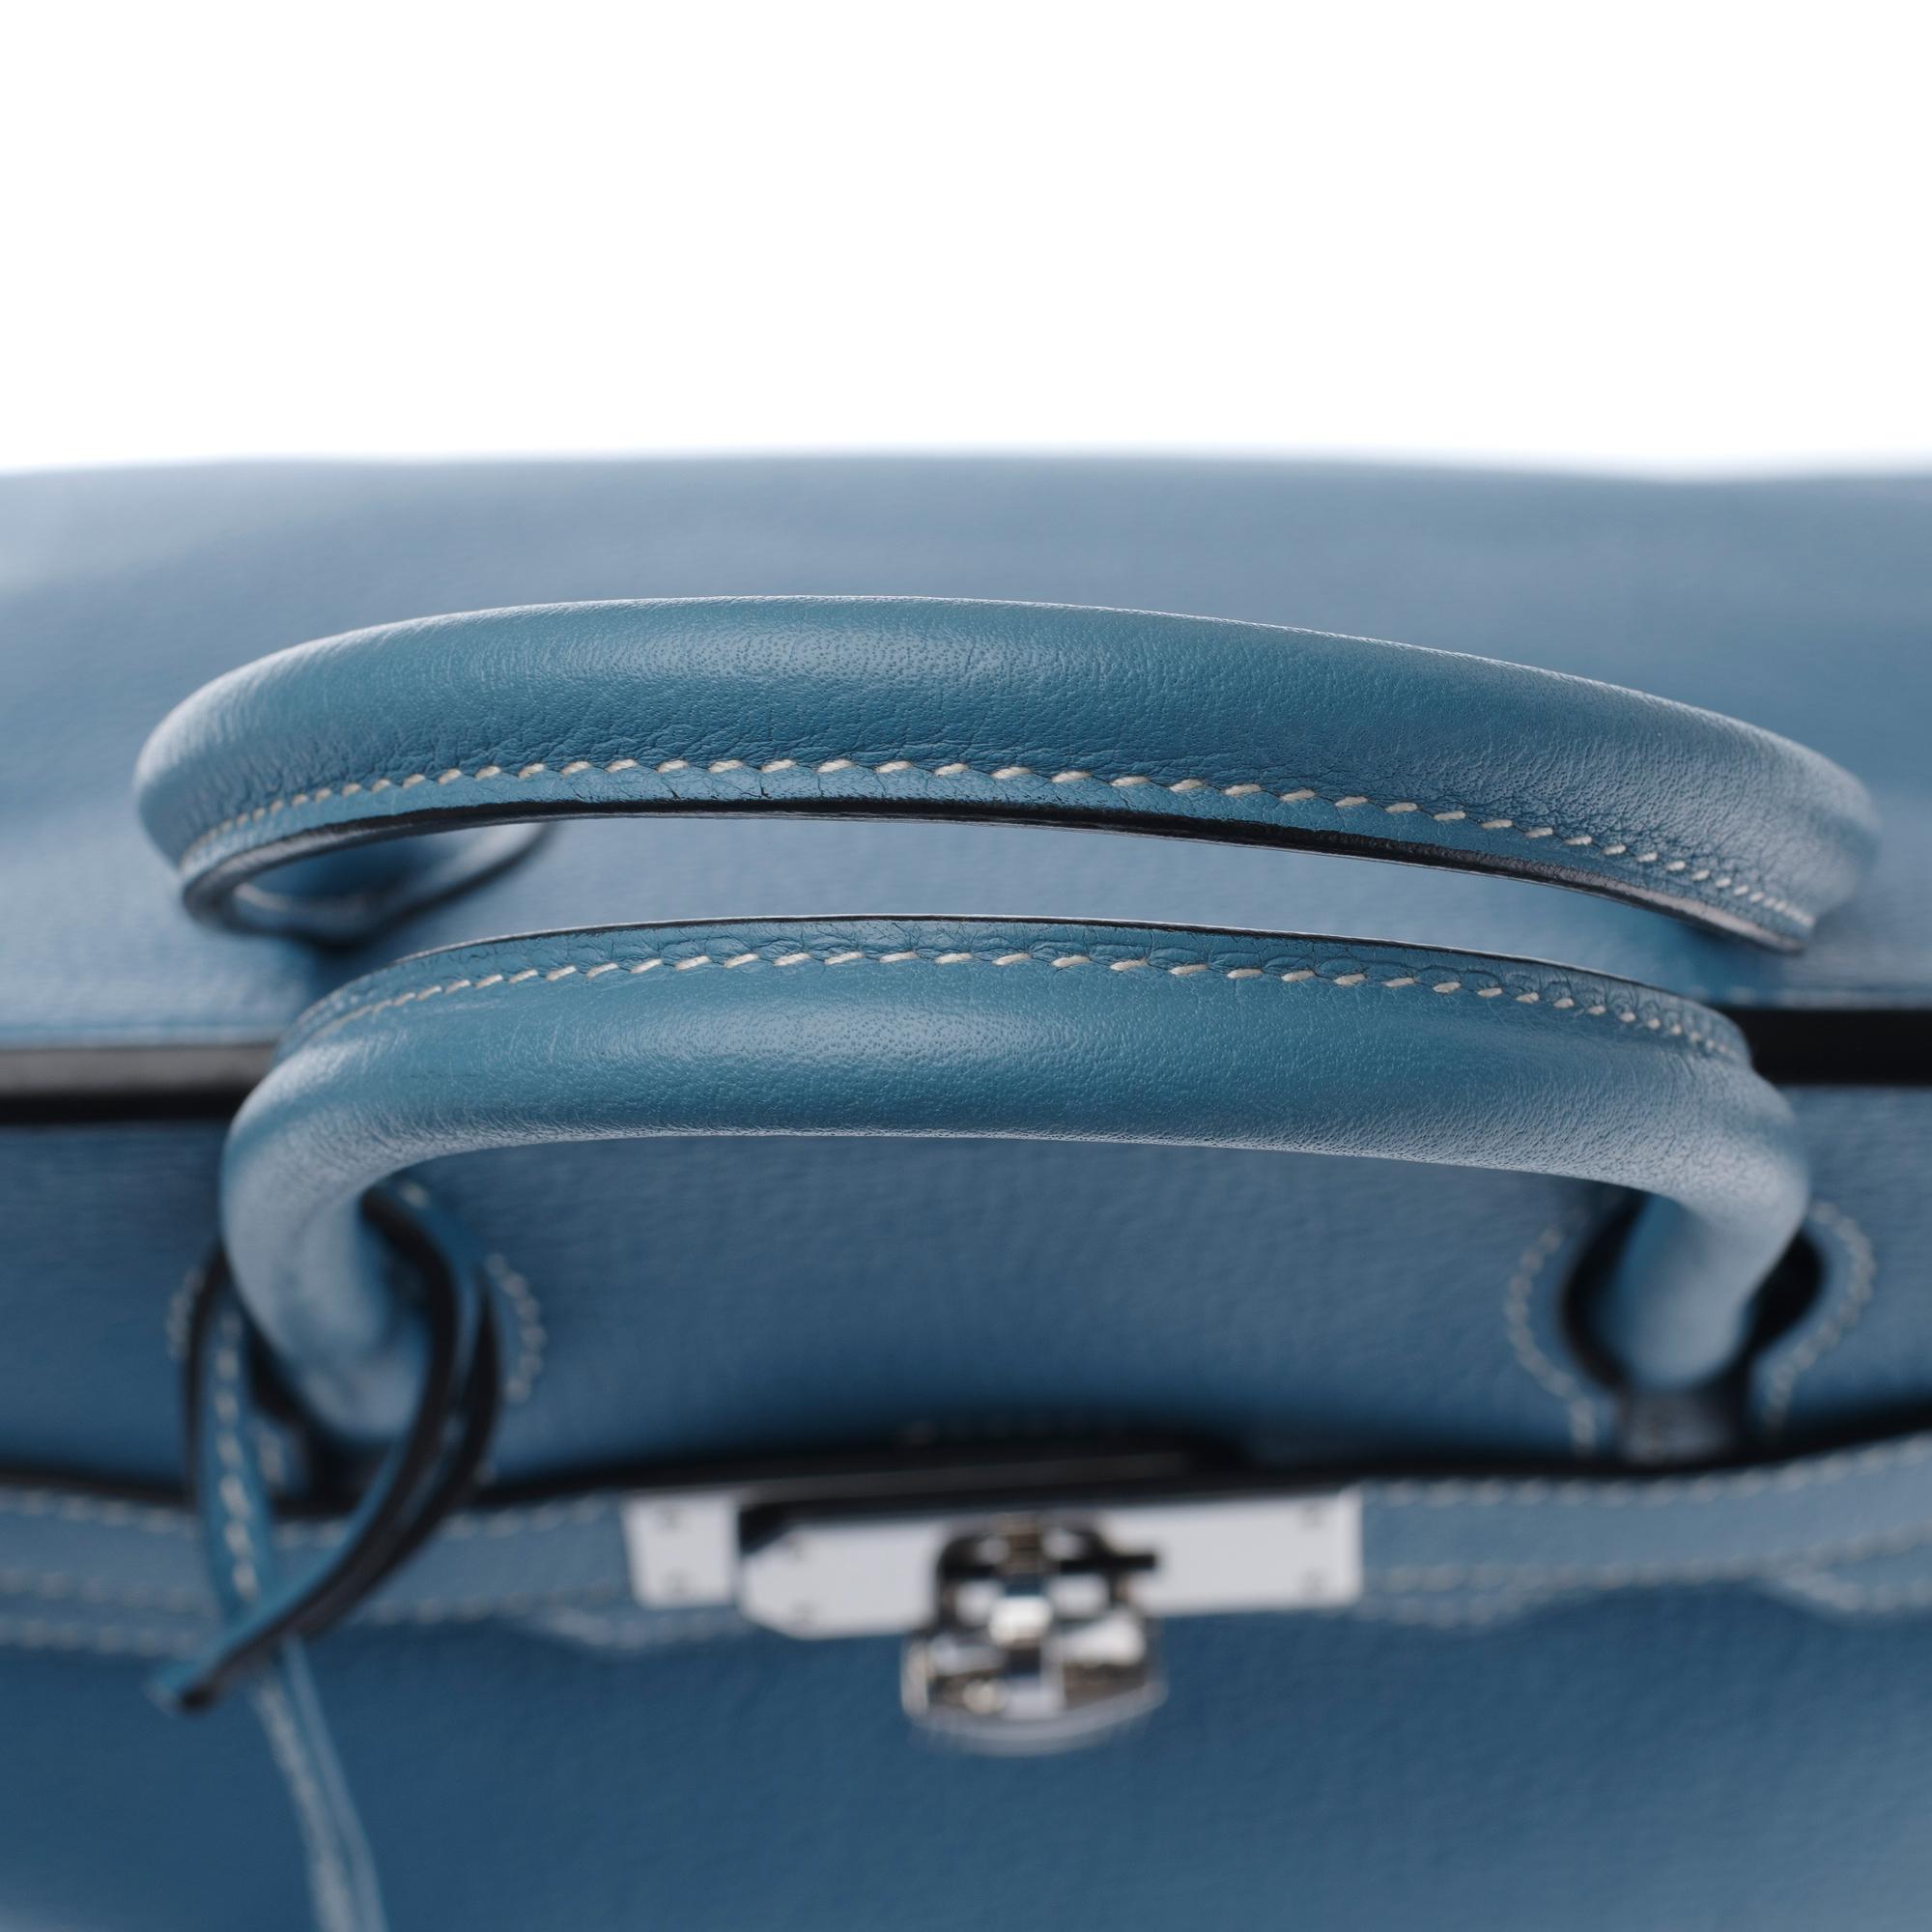 Hermès Birkin 30 handbag in Togo blue jean leather, PHW 4